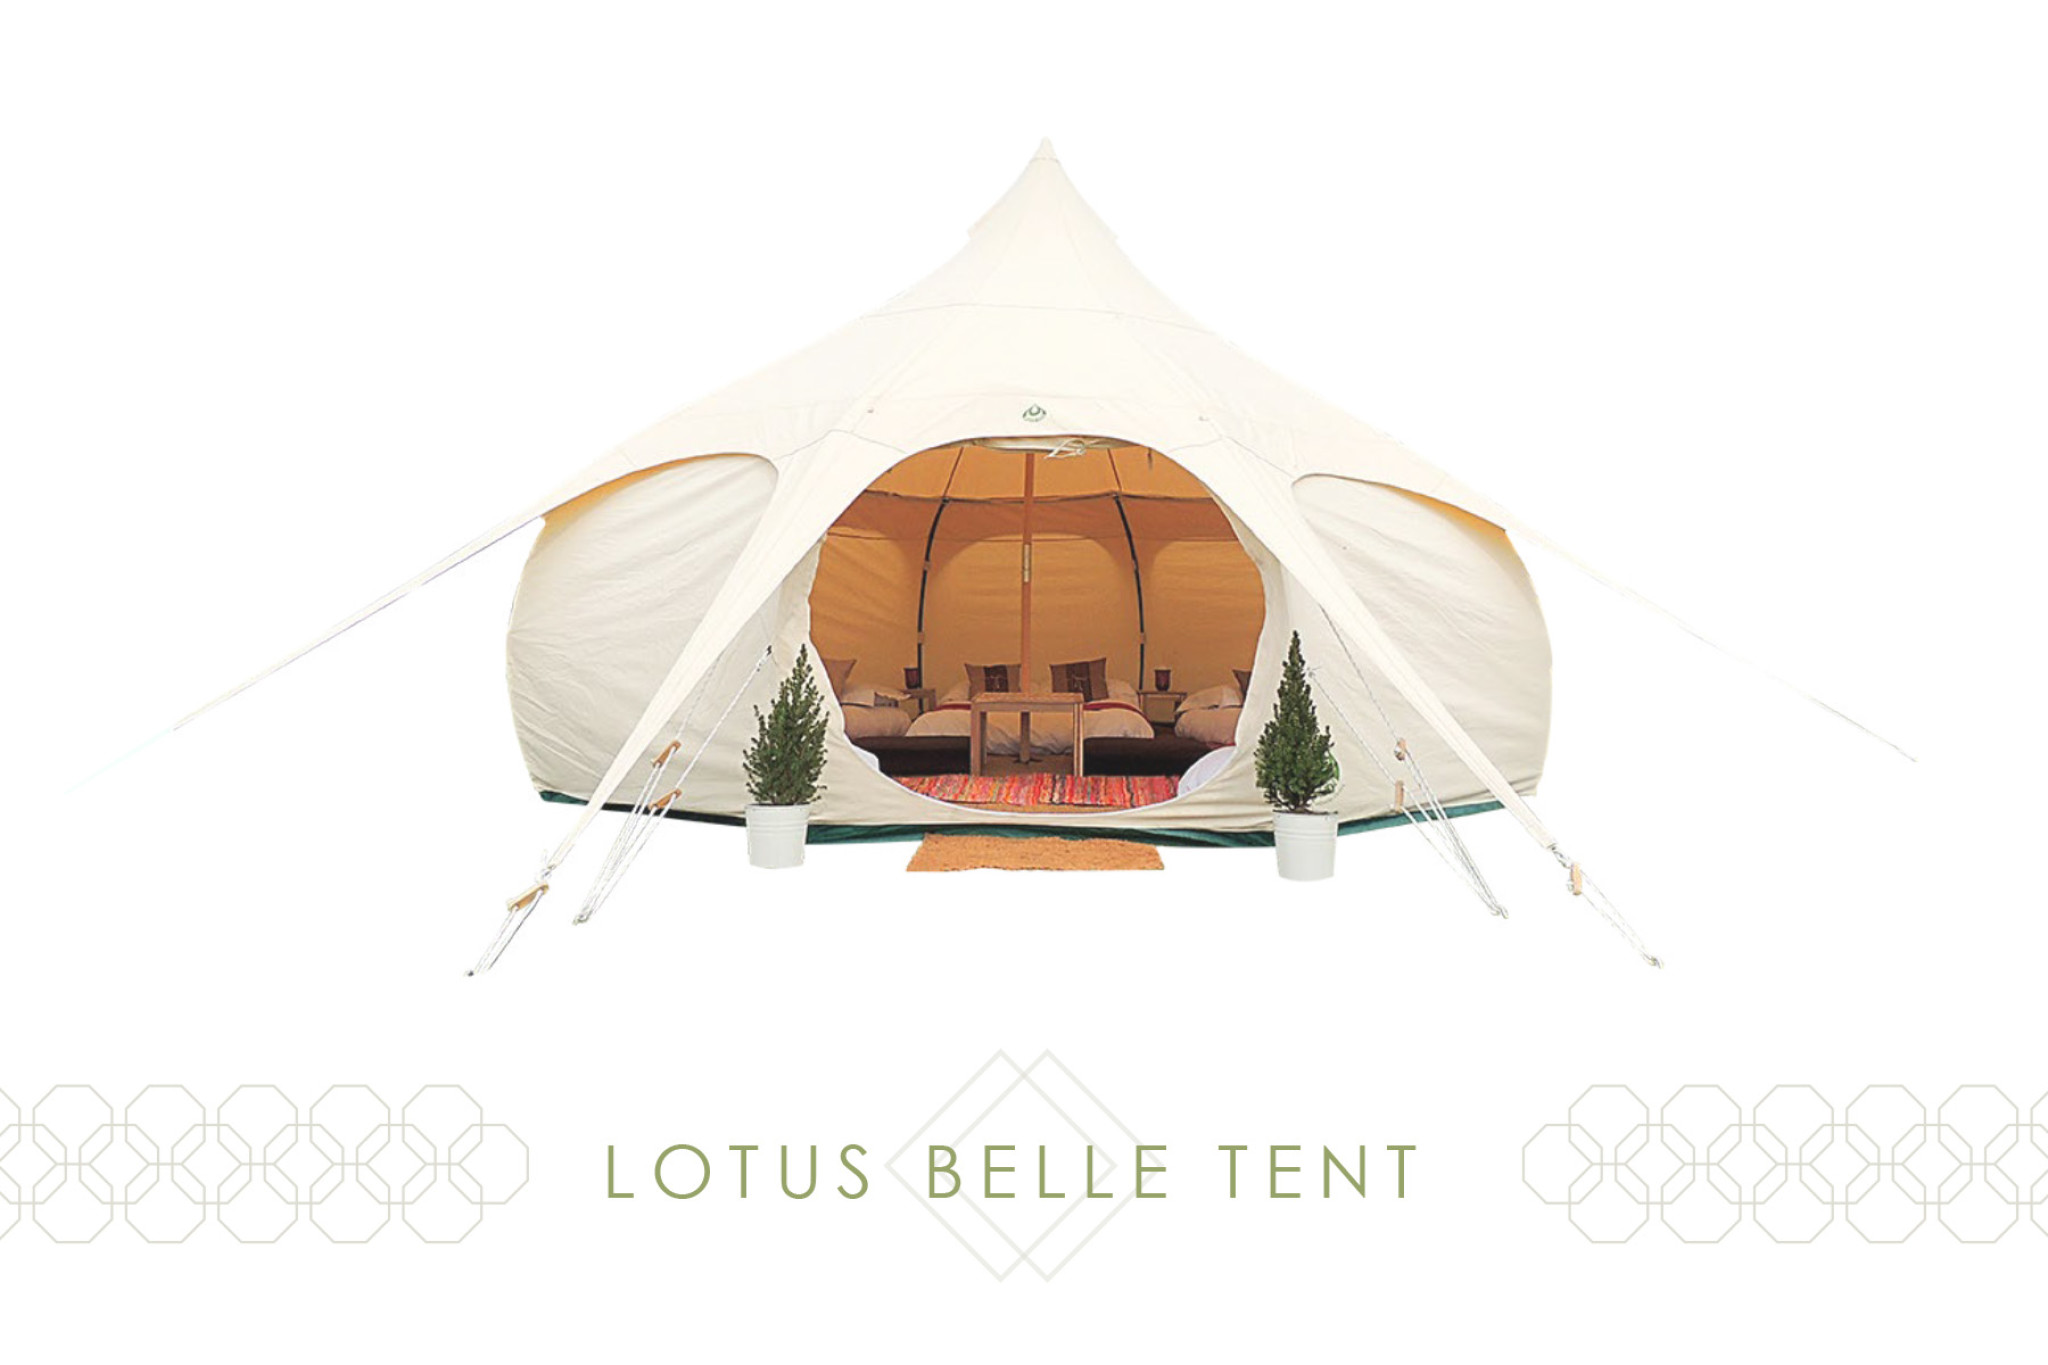 Lotus Bell Tent - WP site.jpg